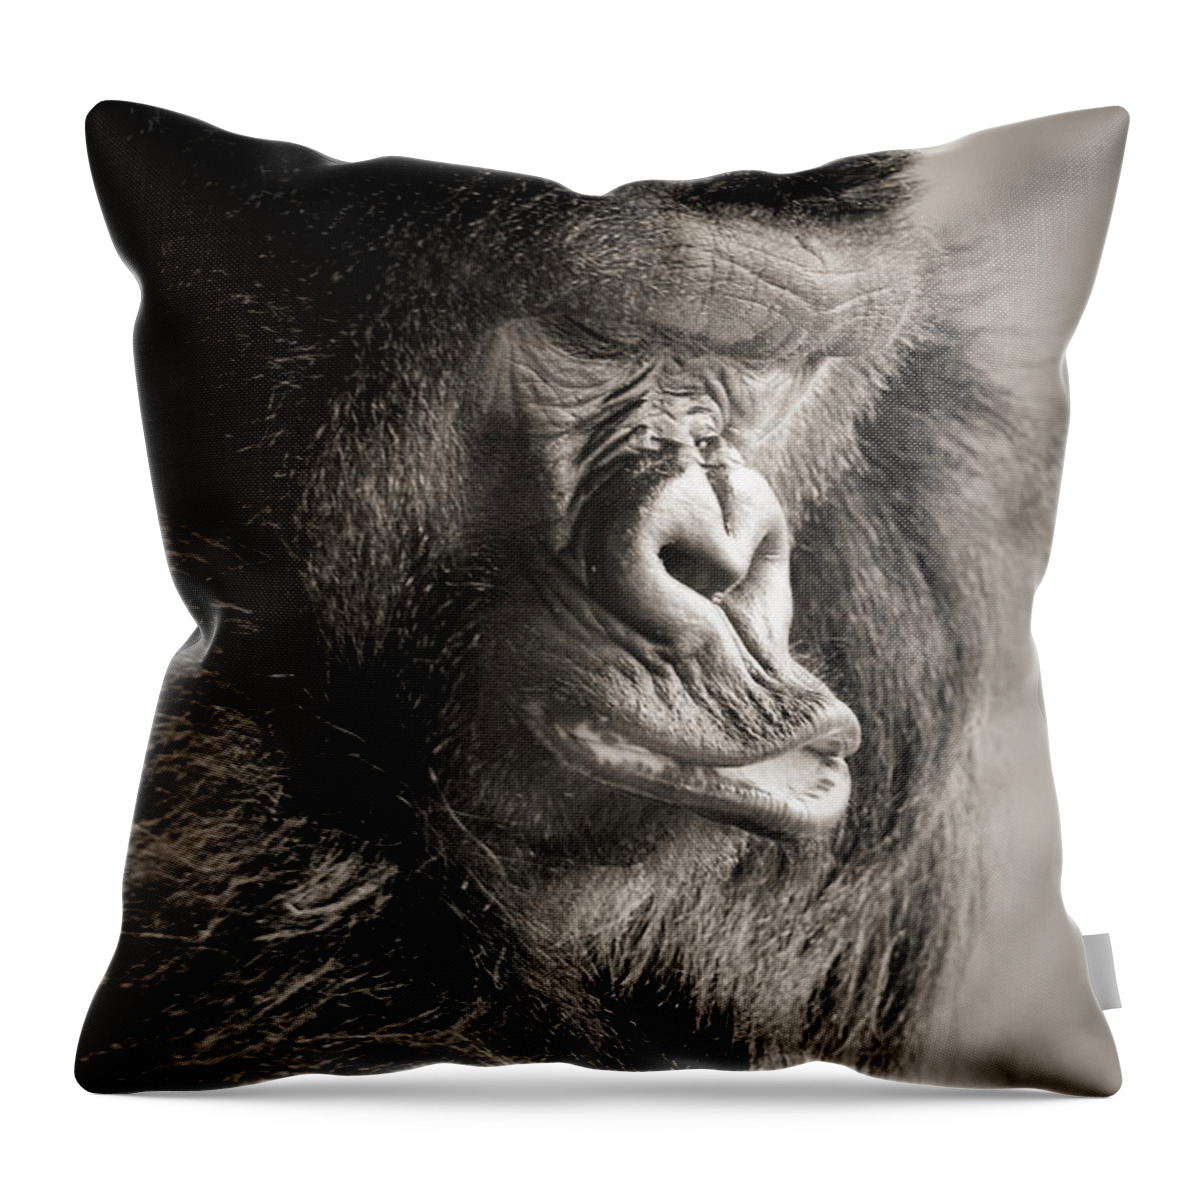 Gorilla Throw Pillow featuring the photograph Gorilla Poses III by Norma Warden